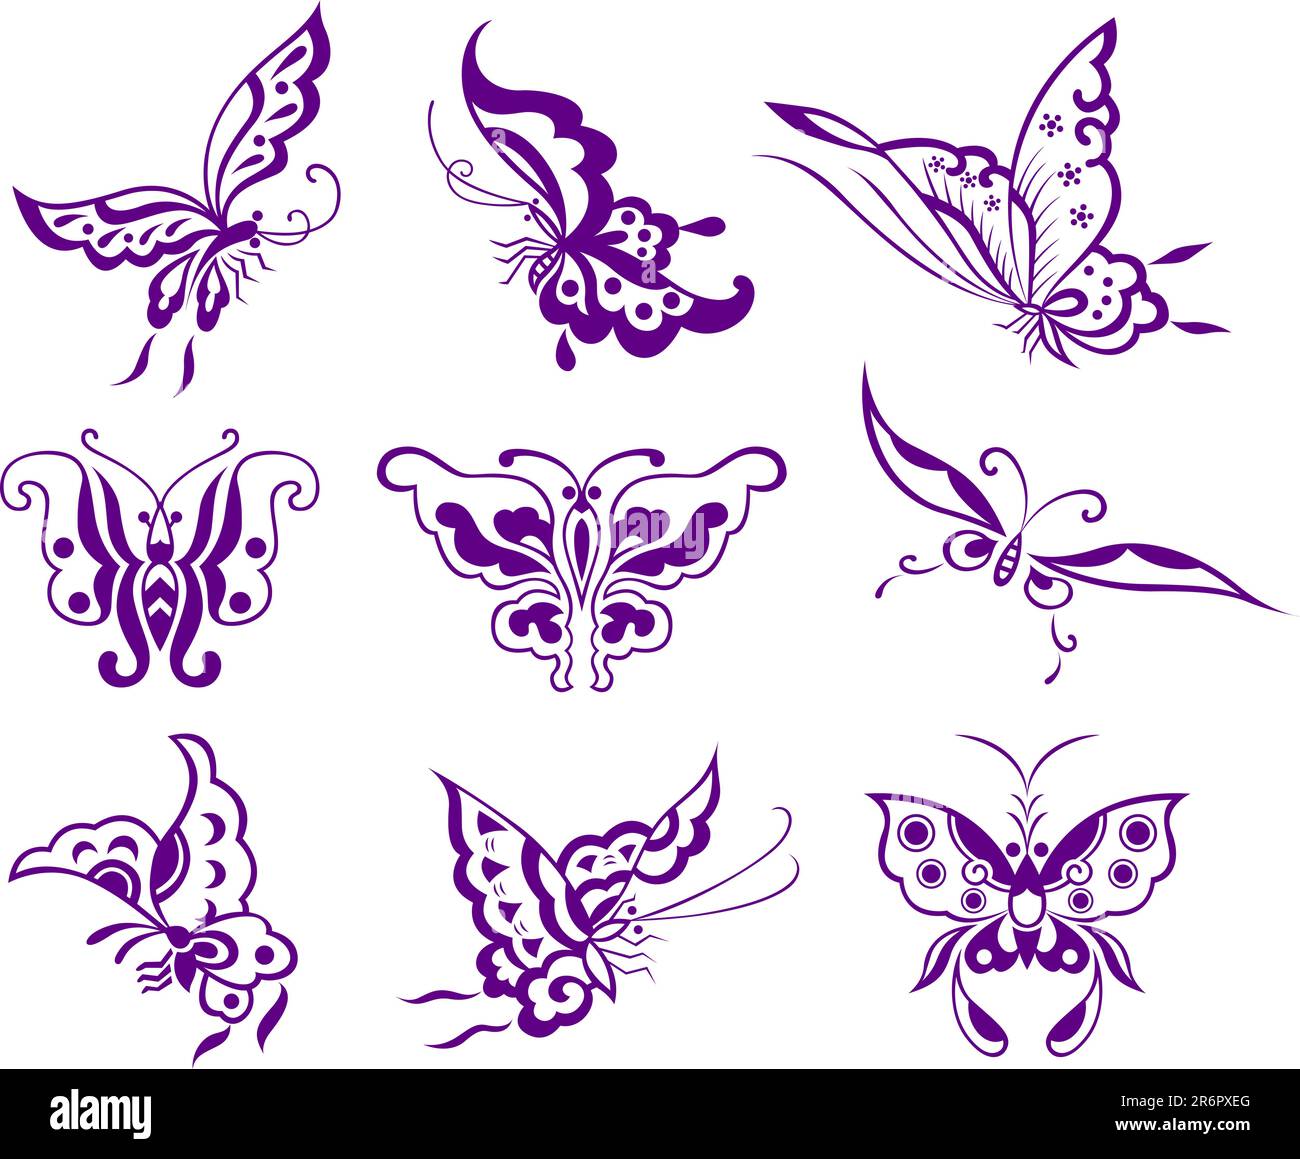 butterfly illustration Stock Vector